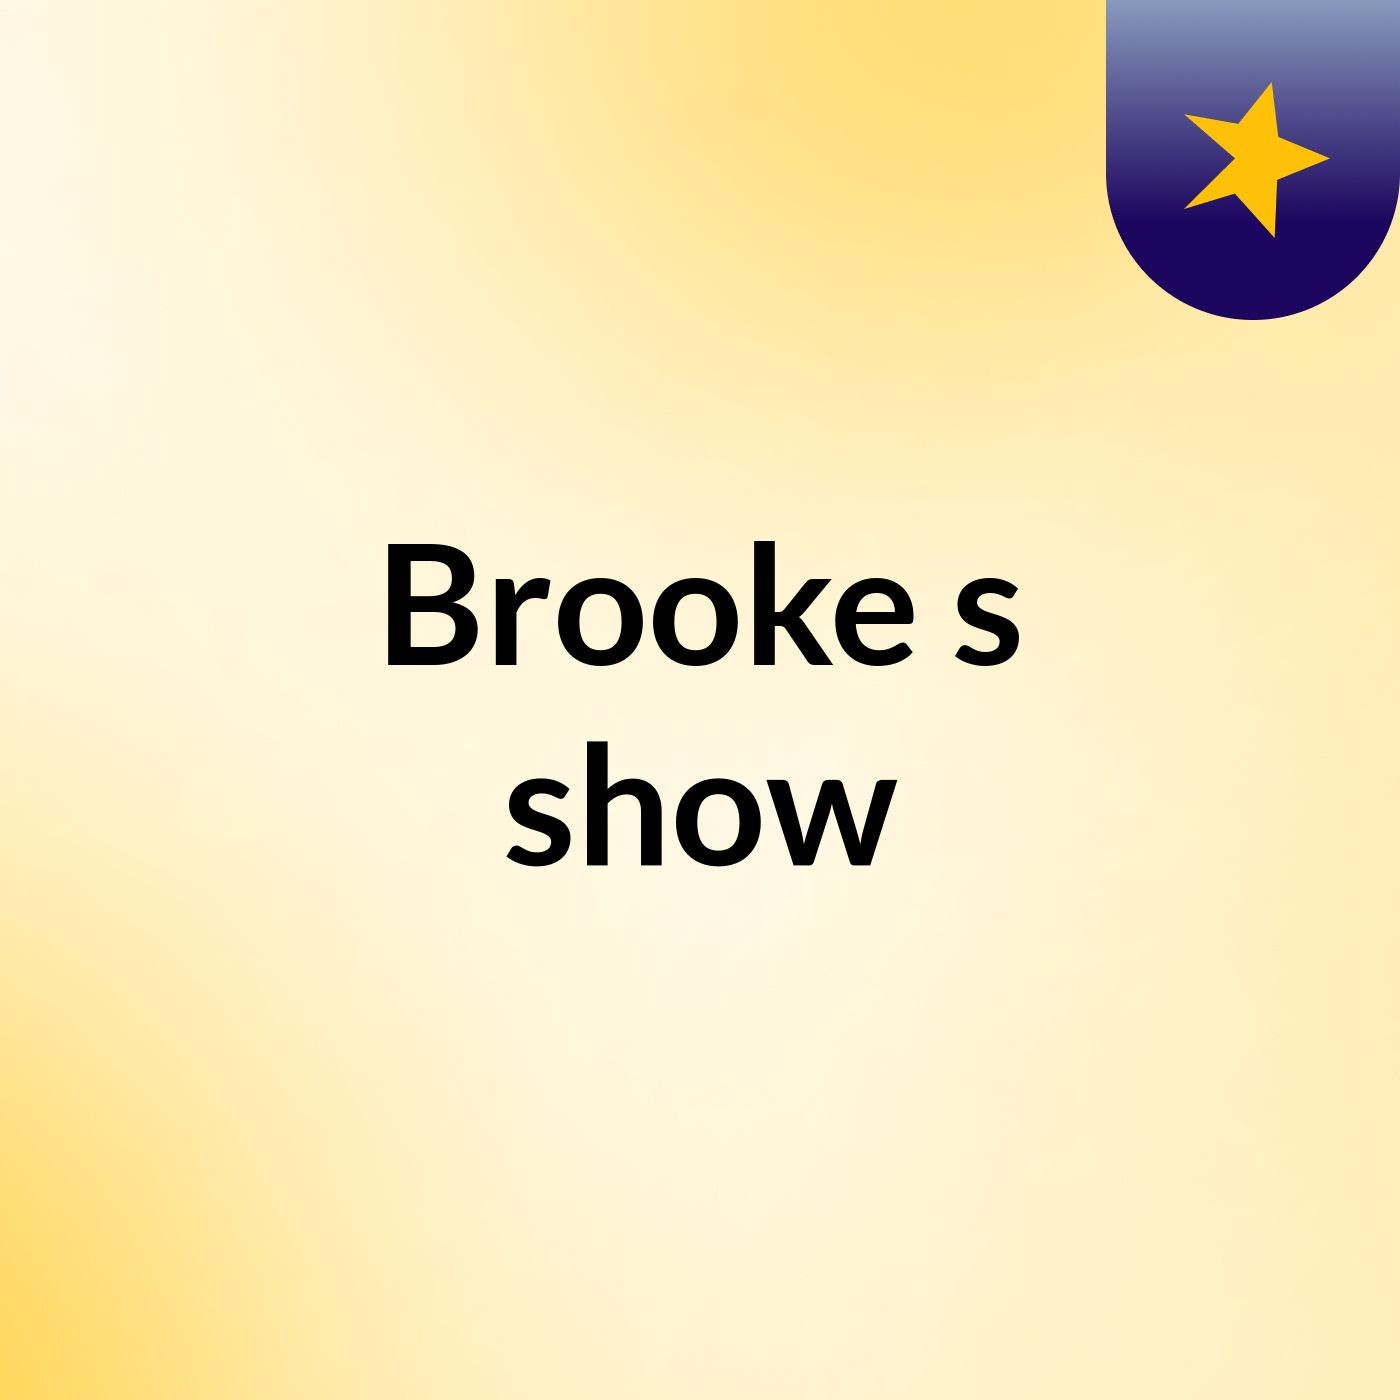 Brooke's show